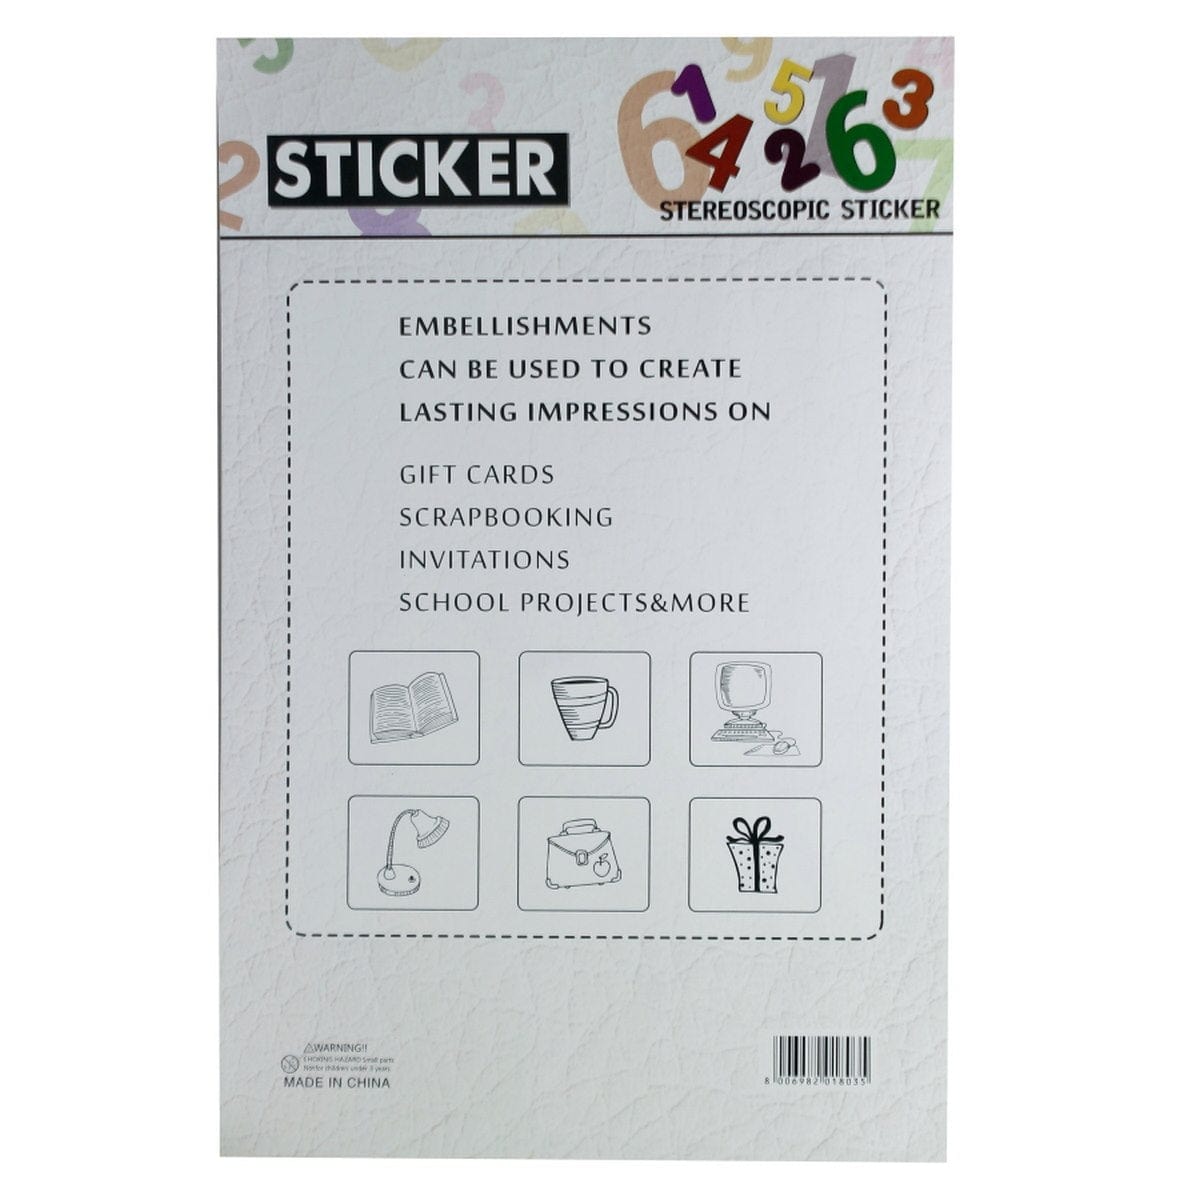 jags-mumbai Stickers Sticker Stereoscopic  0-9 WX002YK